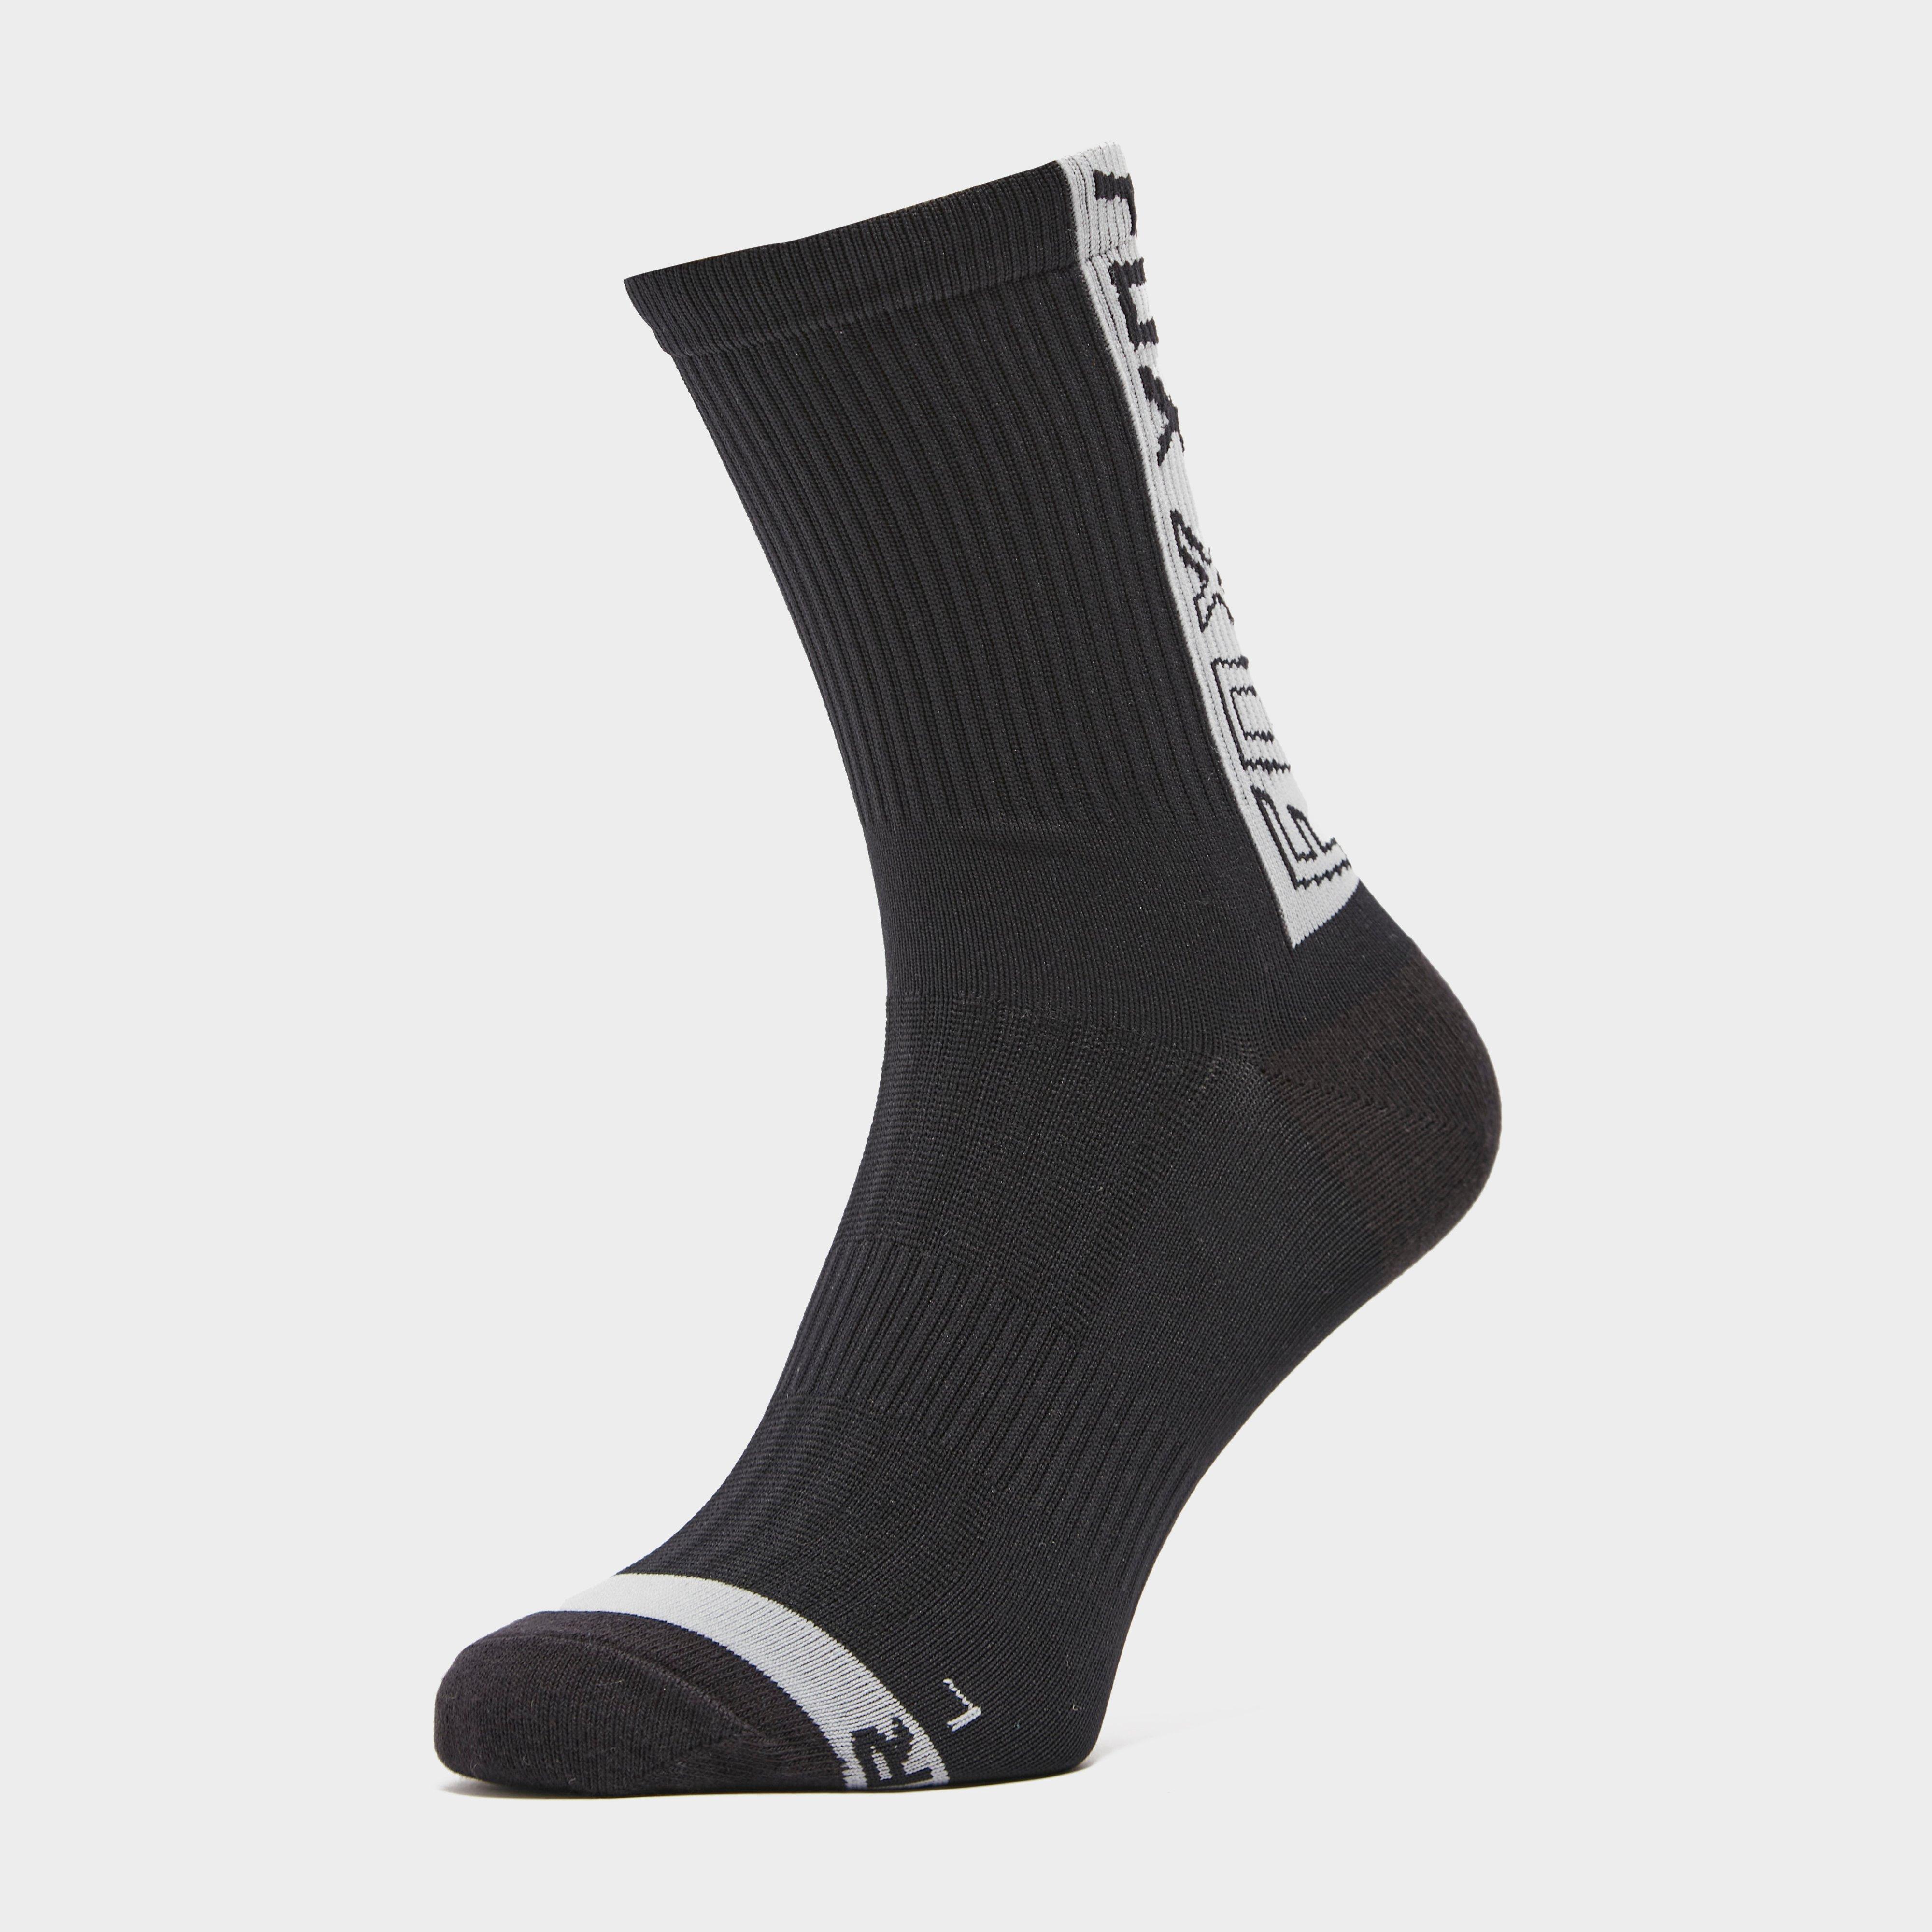 Image of Fox Men's 6" Ranger Socks - Black/Black, BLACK/BLACK